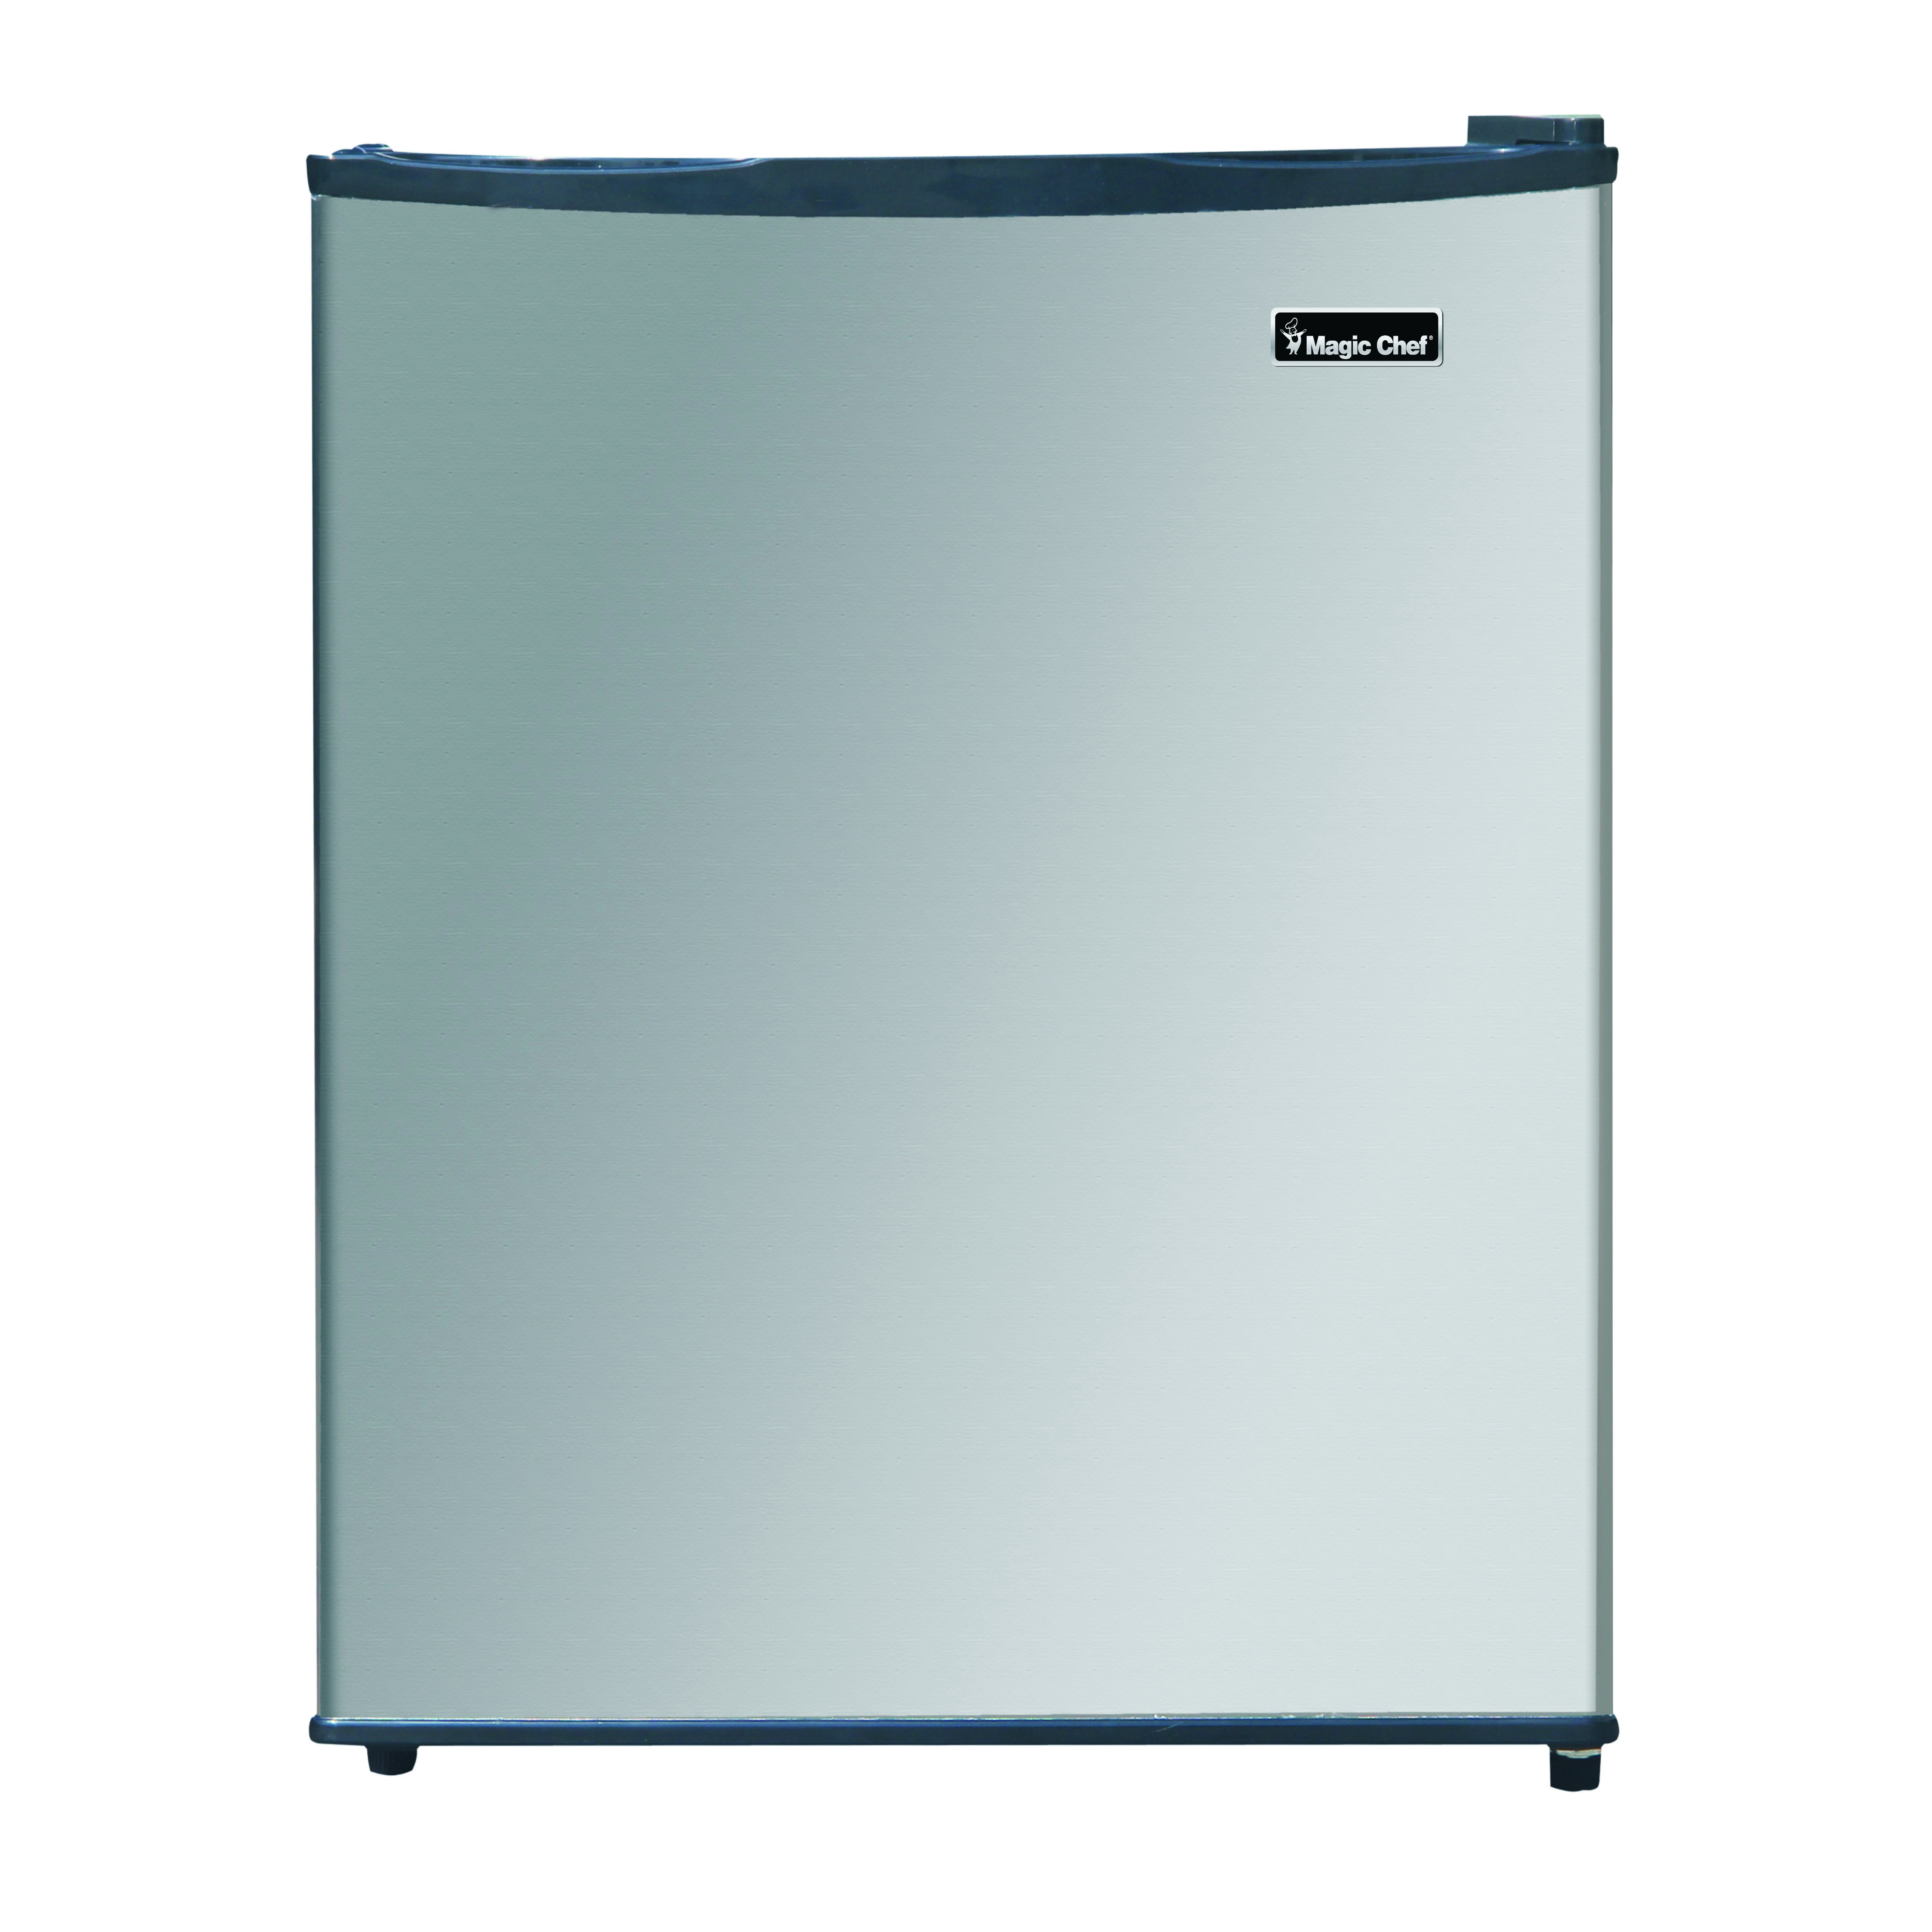 Mcar240se2 2.4 Cf Compact Refrigerator, Black